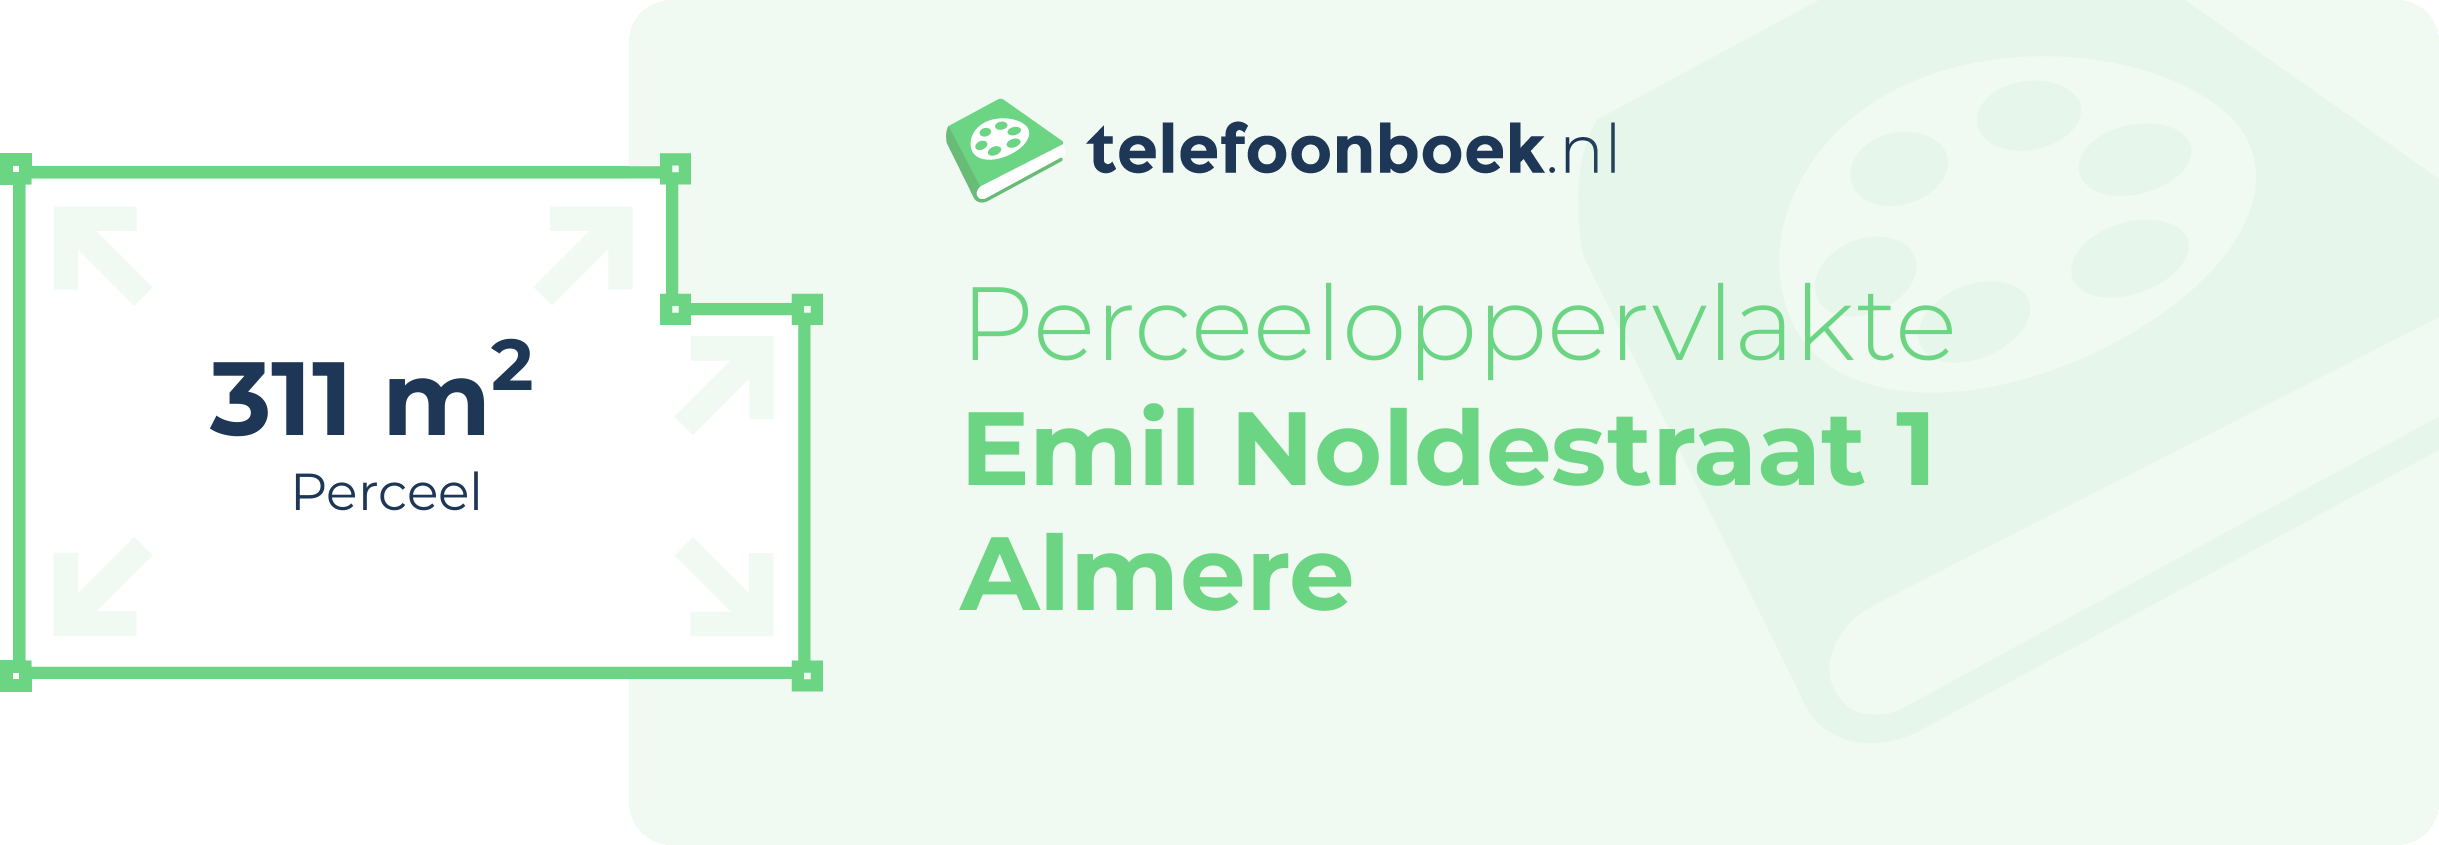 Perceeloppervlakte Emil Noldestraat 1 Almere